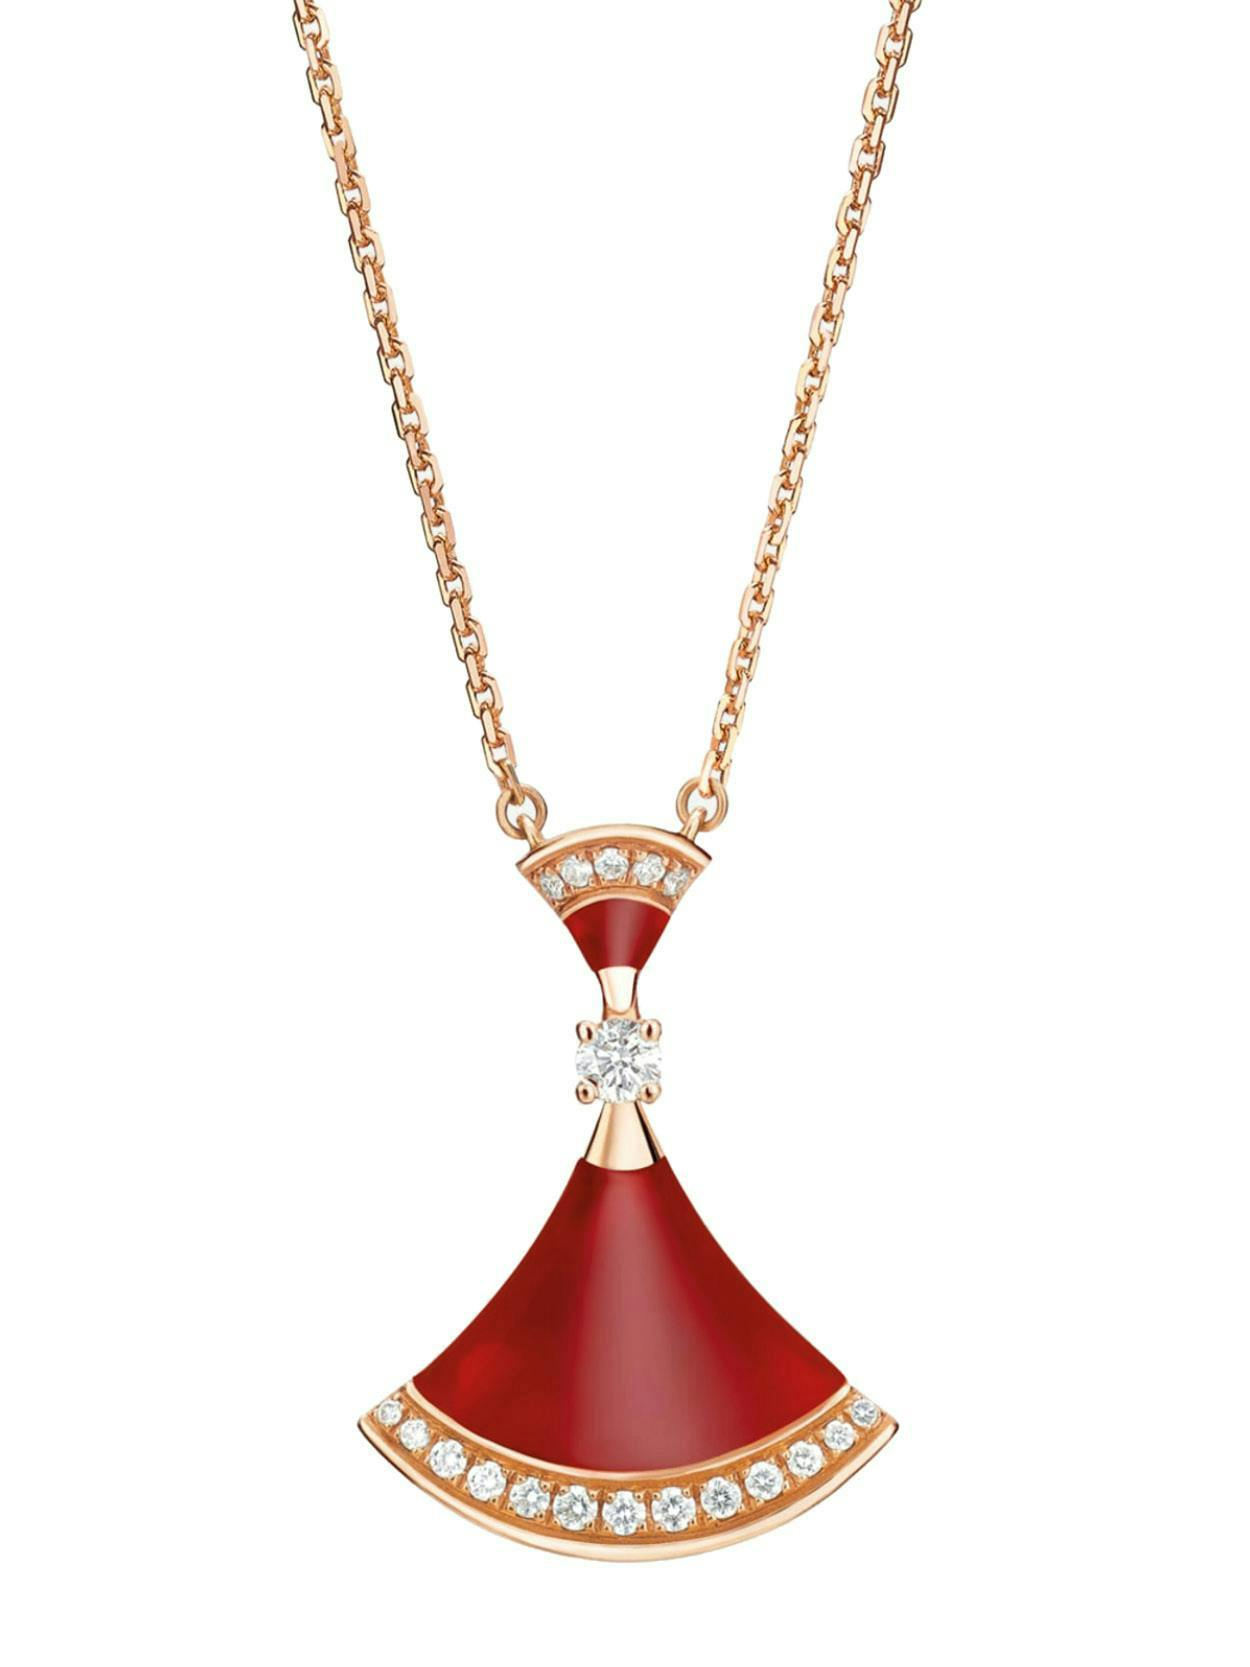 accessories necklace jewelry pendant